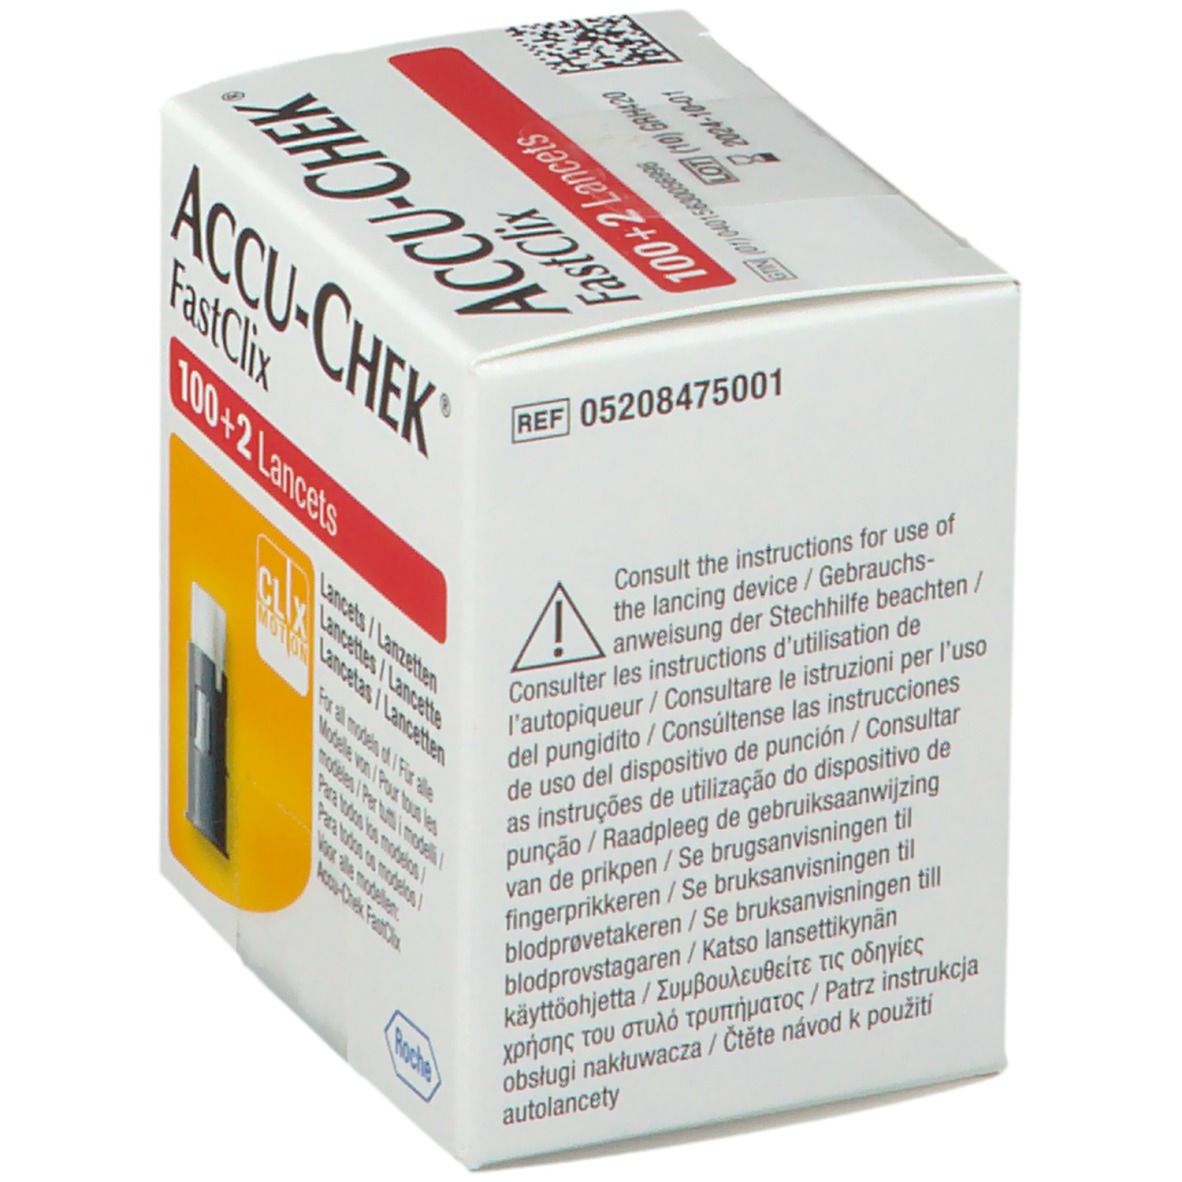 Accu-Chek® FastClix Lancette